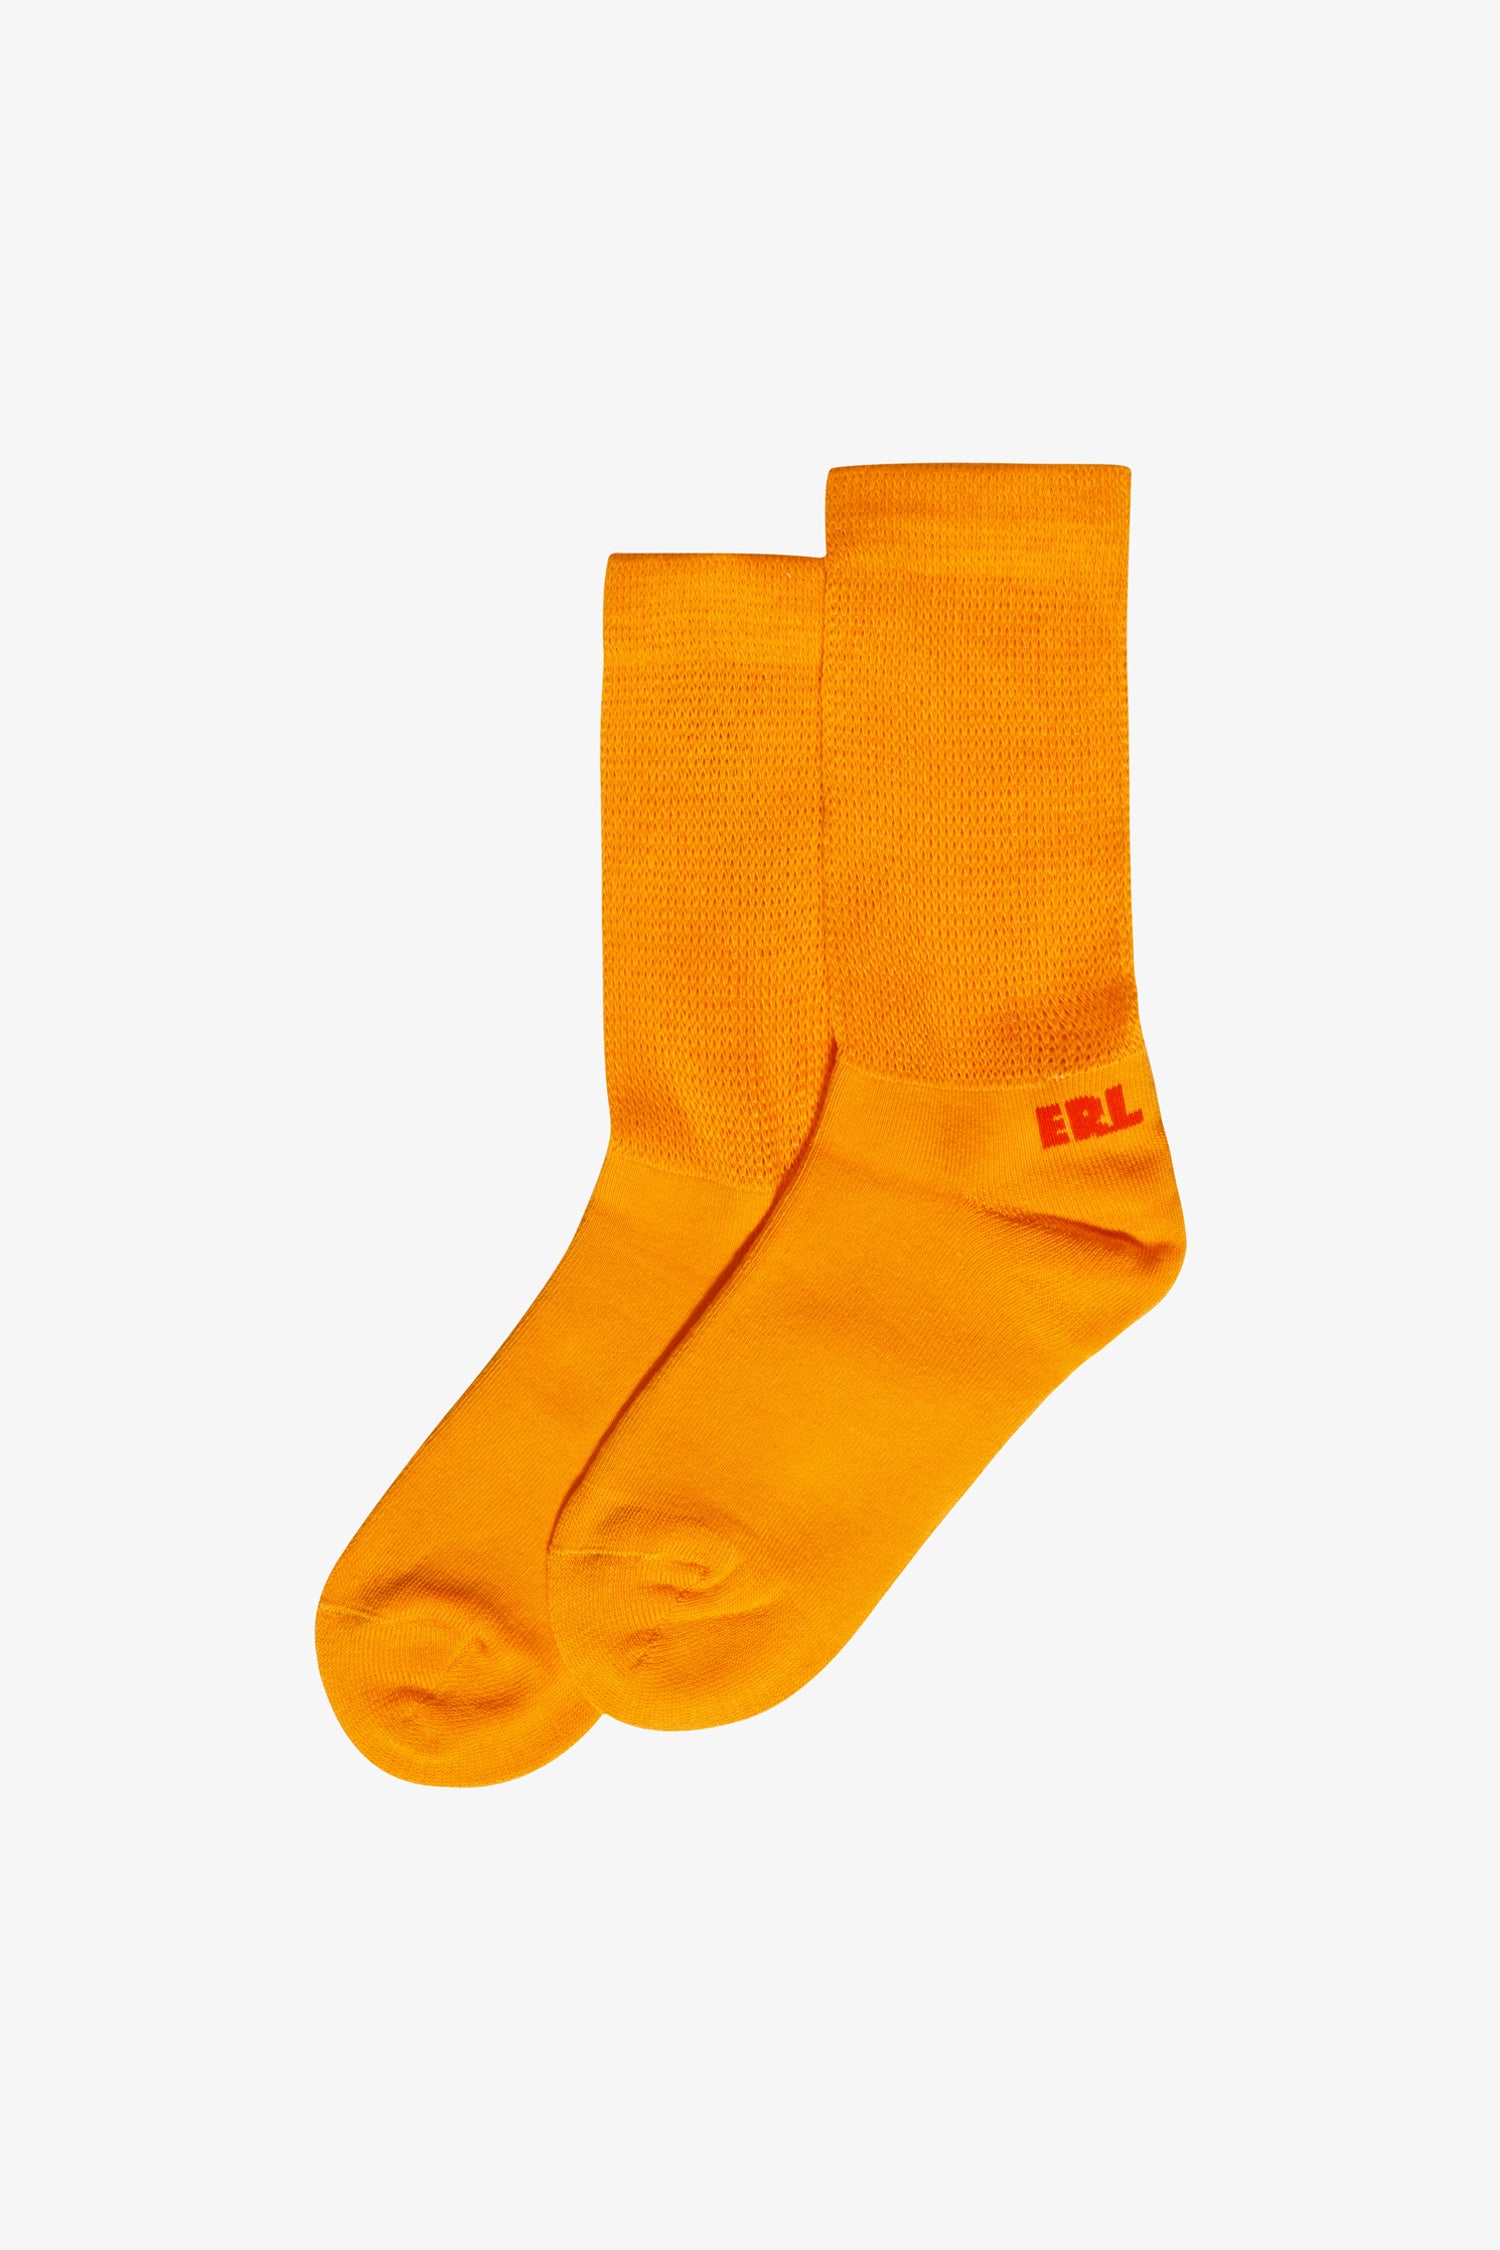 Selectshop FRAME - ERL Socks Accessories Dubai